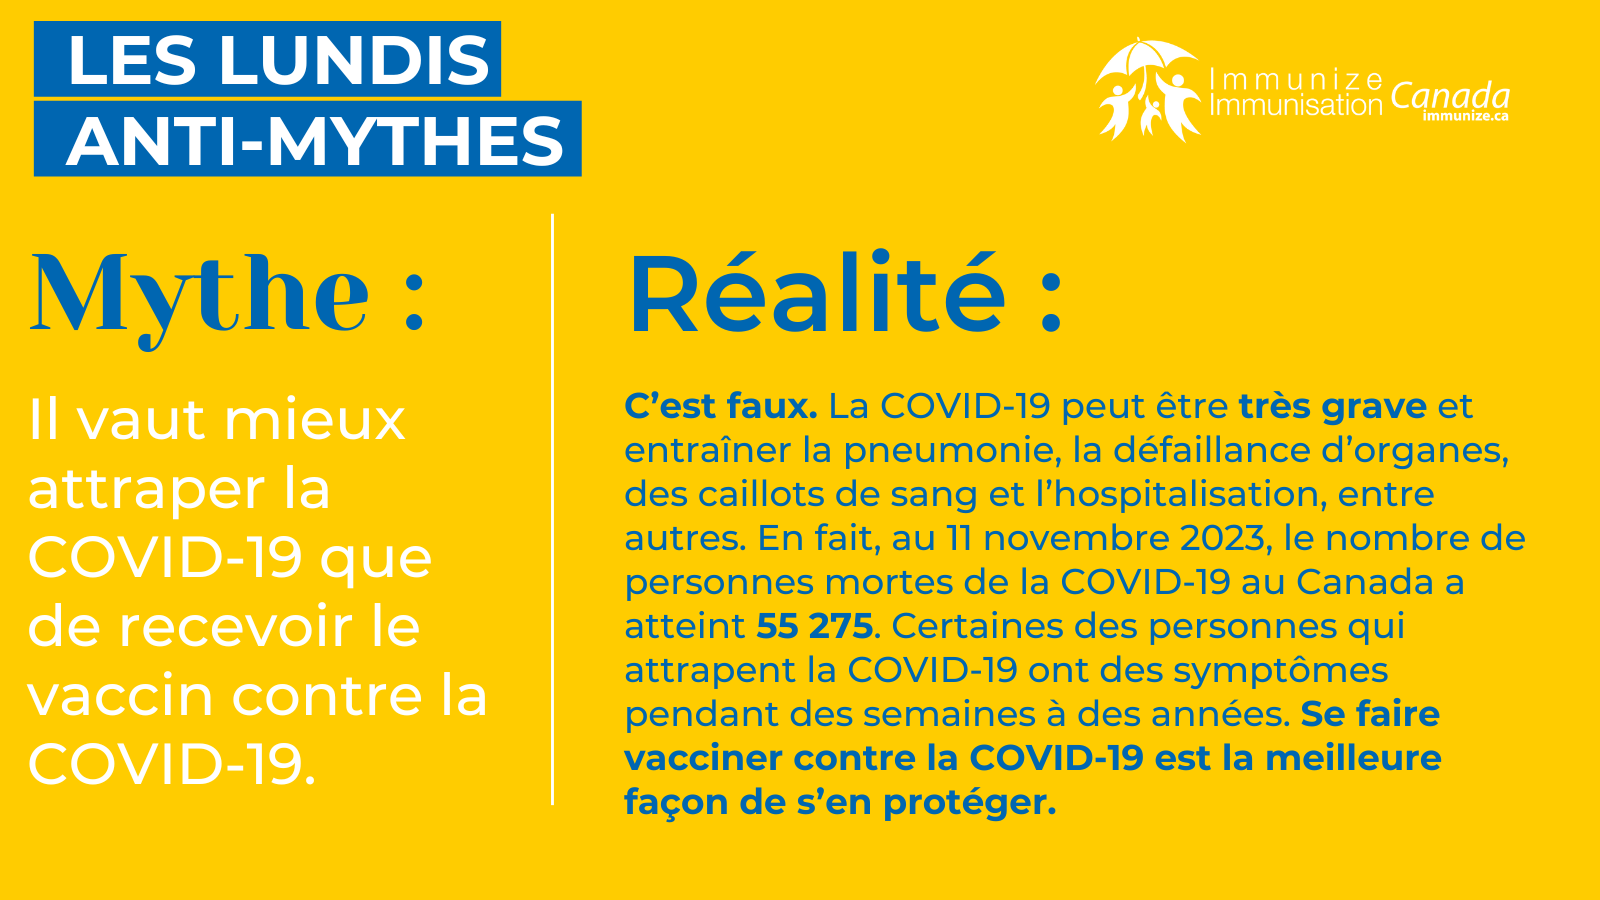 Les lundis anti-mythes (Twitter/X) - la COVID-19 1